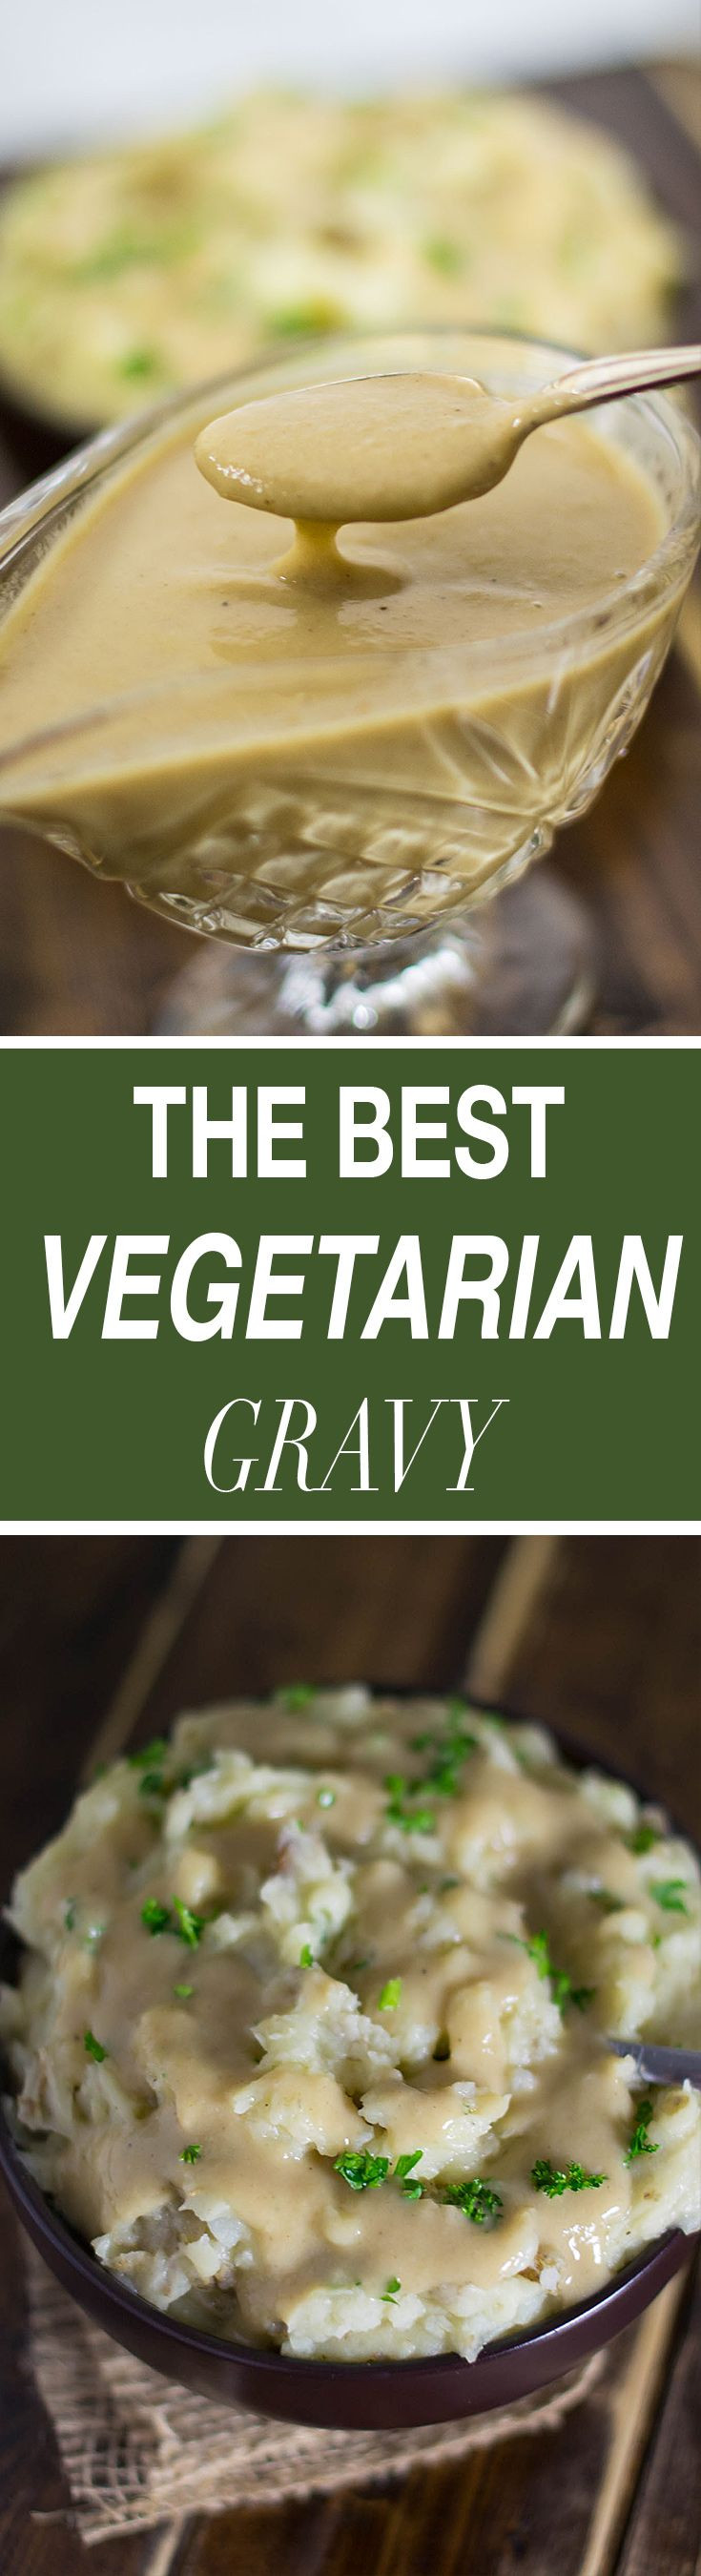 Vegan Thanksgiving Funny
 25 best ideas about Ve arian jokes on Pinterest